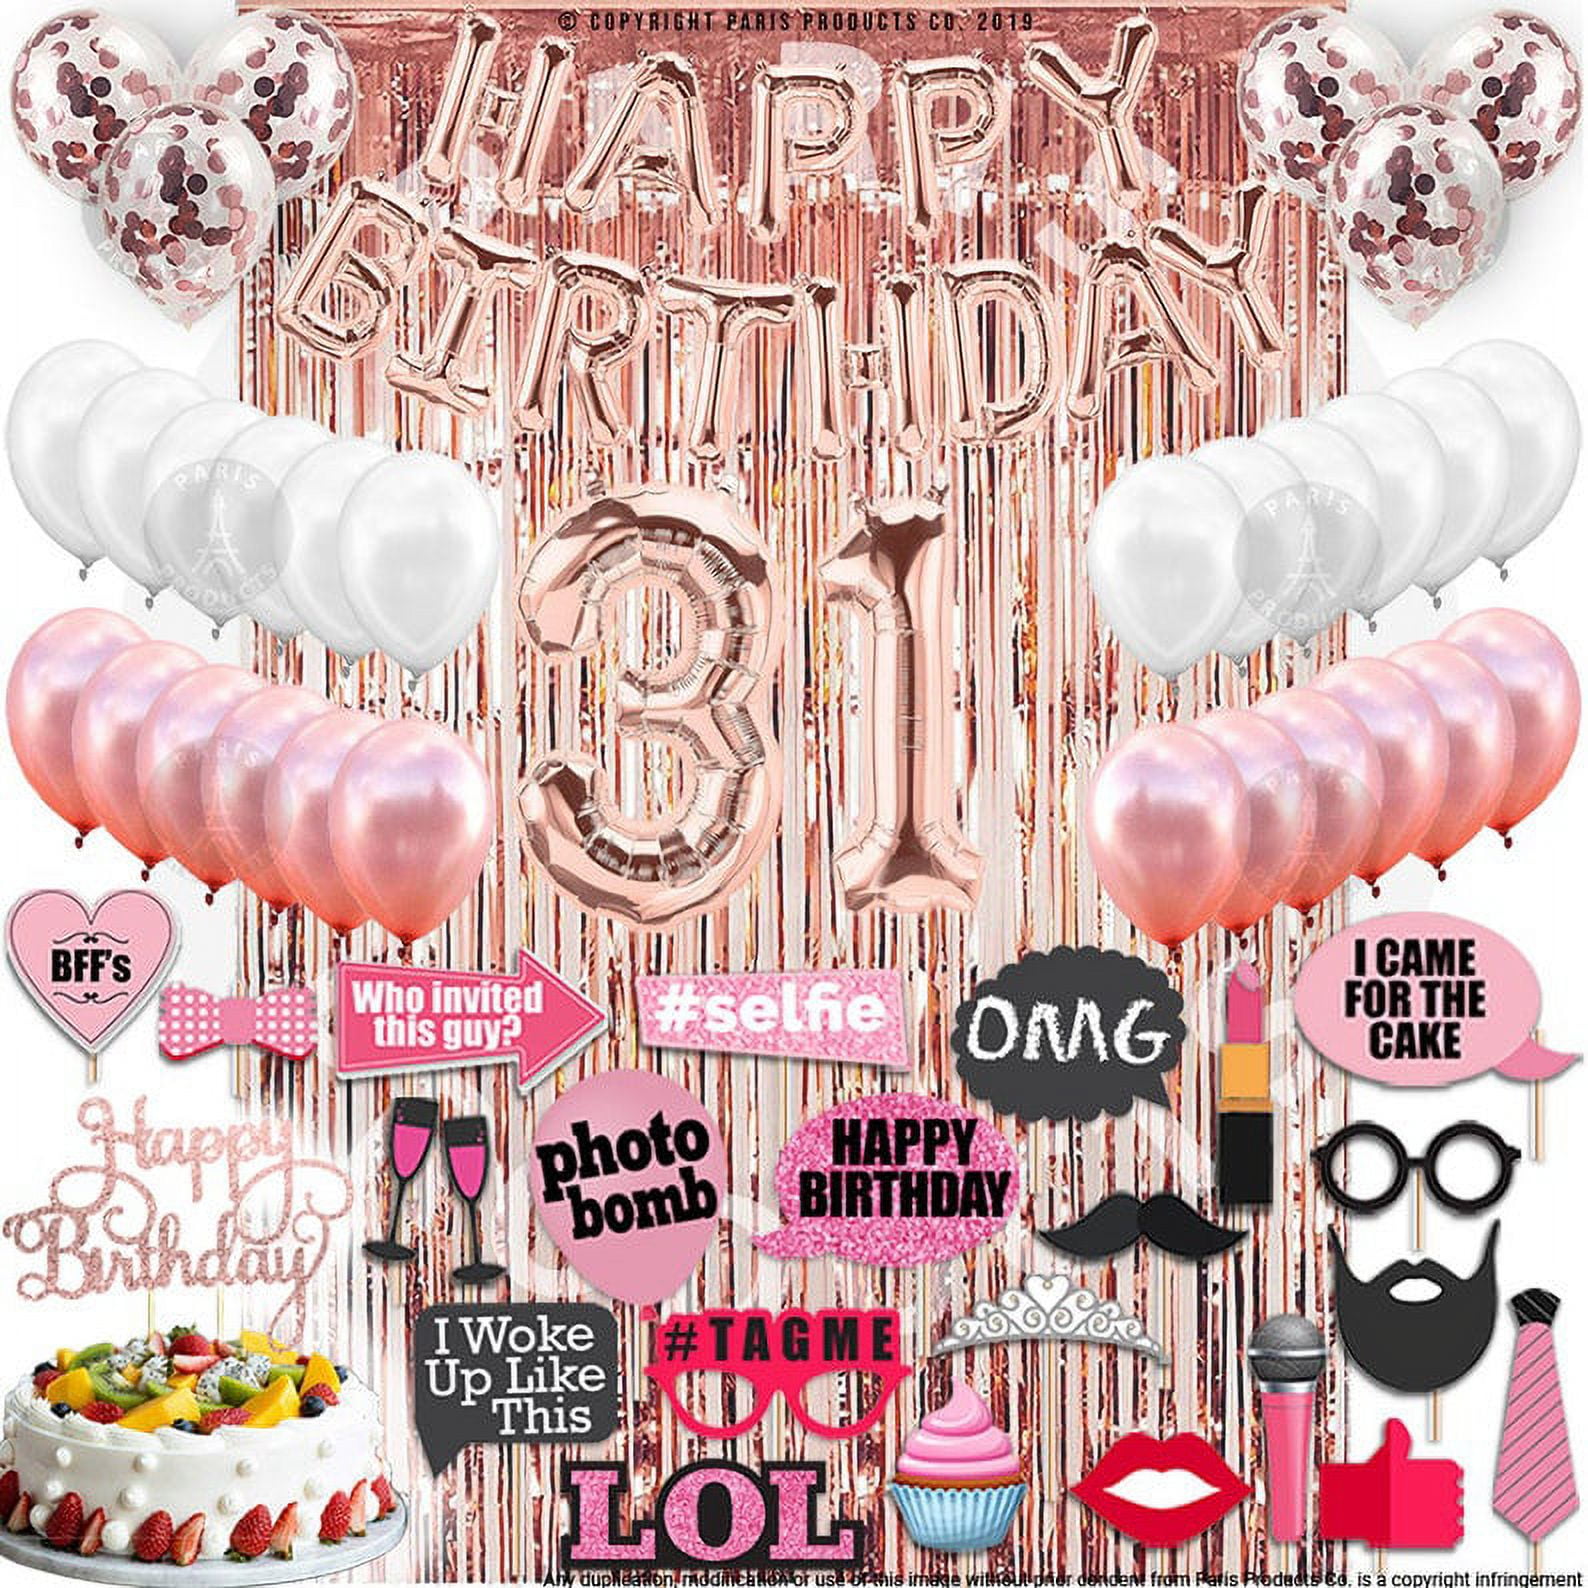 Rose Gold Happy Birthday Decoration Combo Kit for Girls 31 Pcs